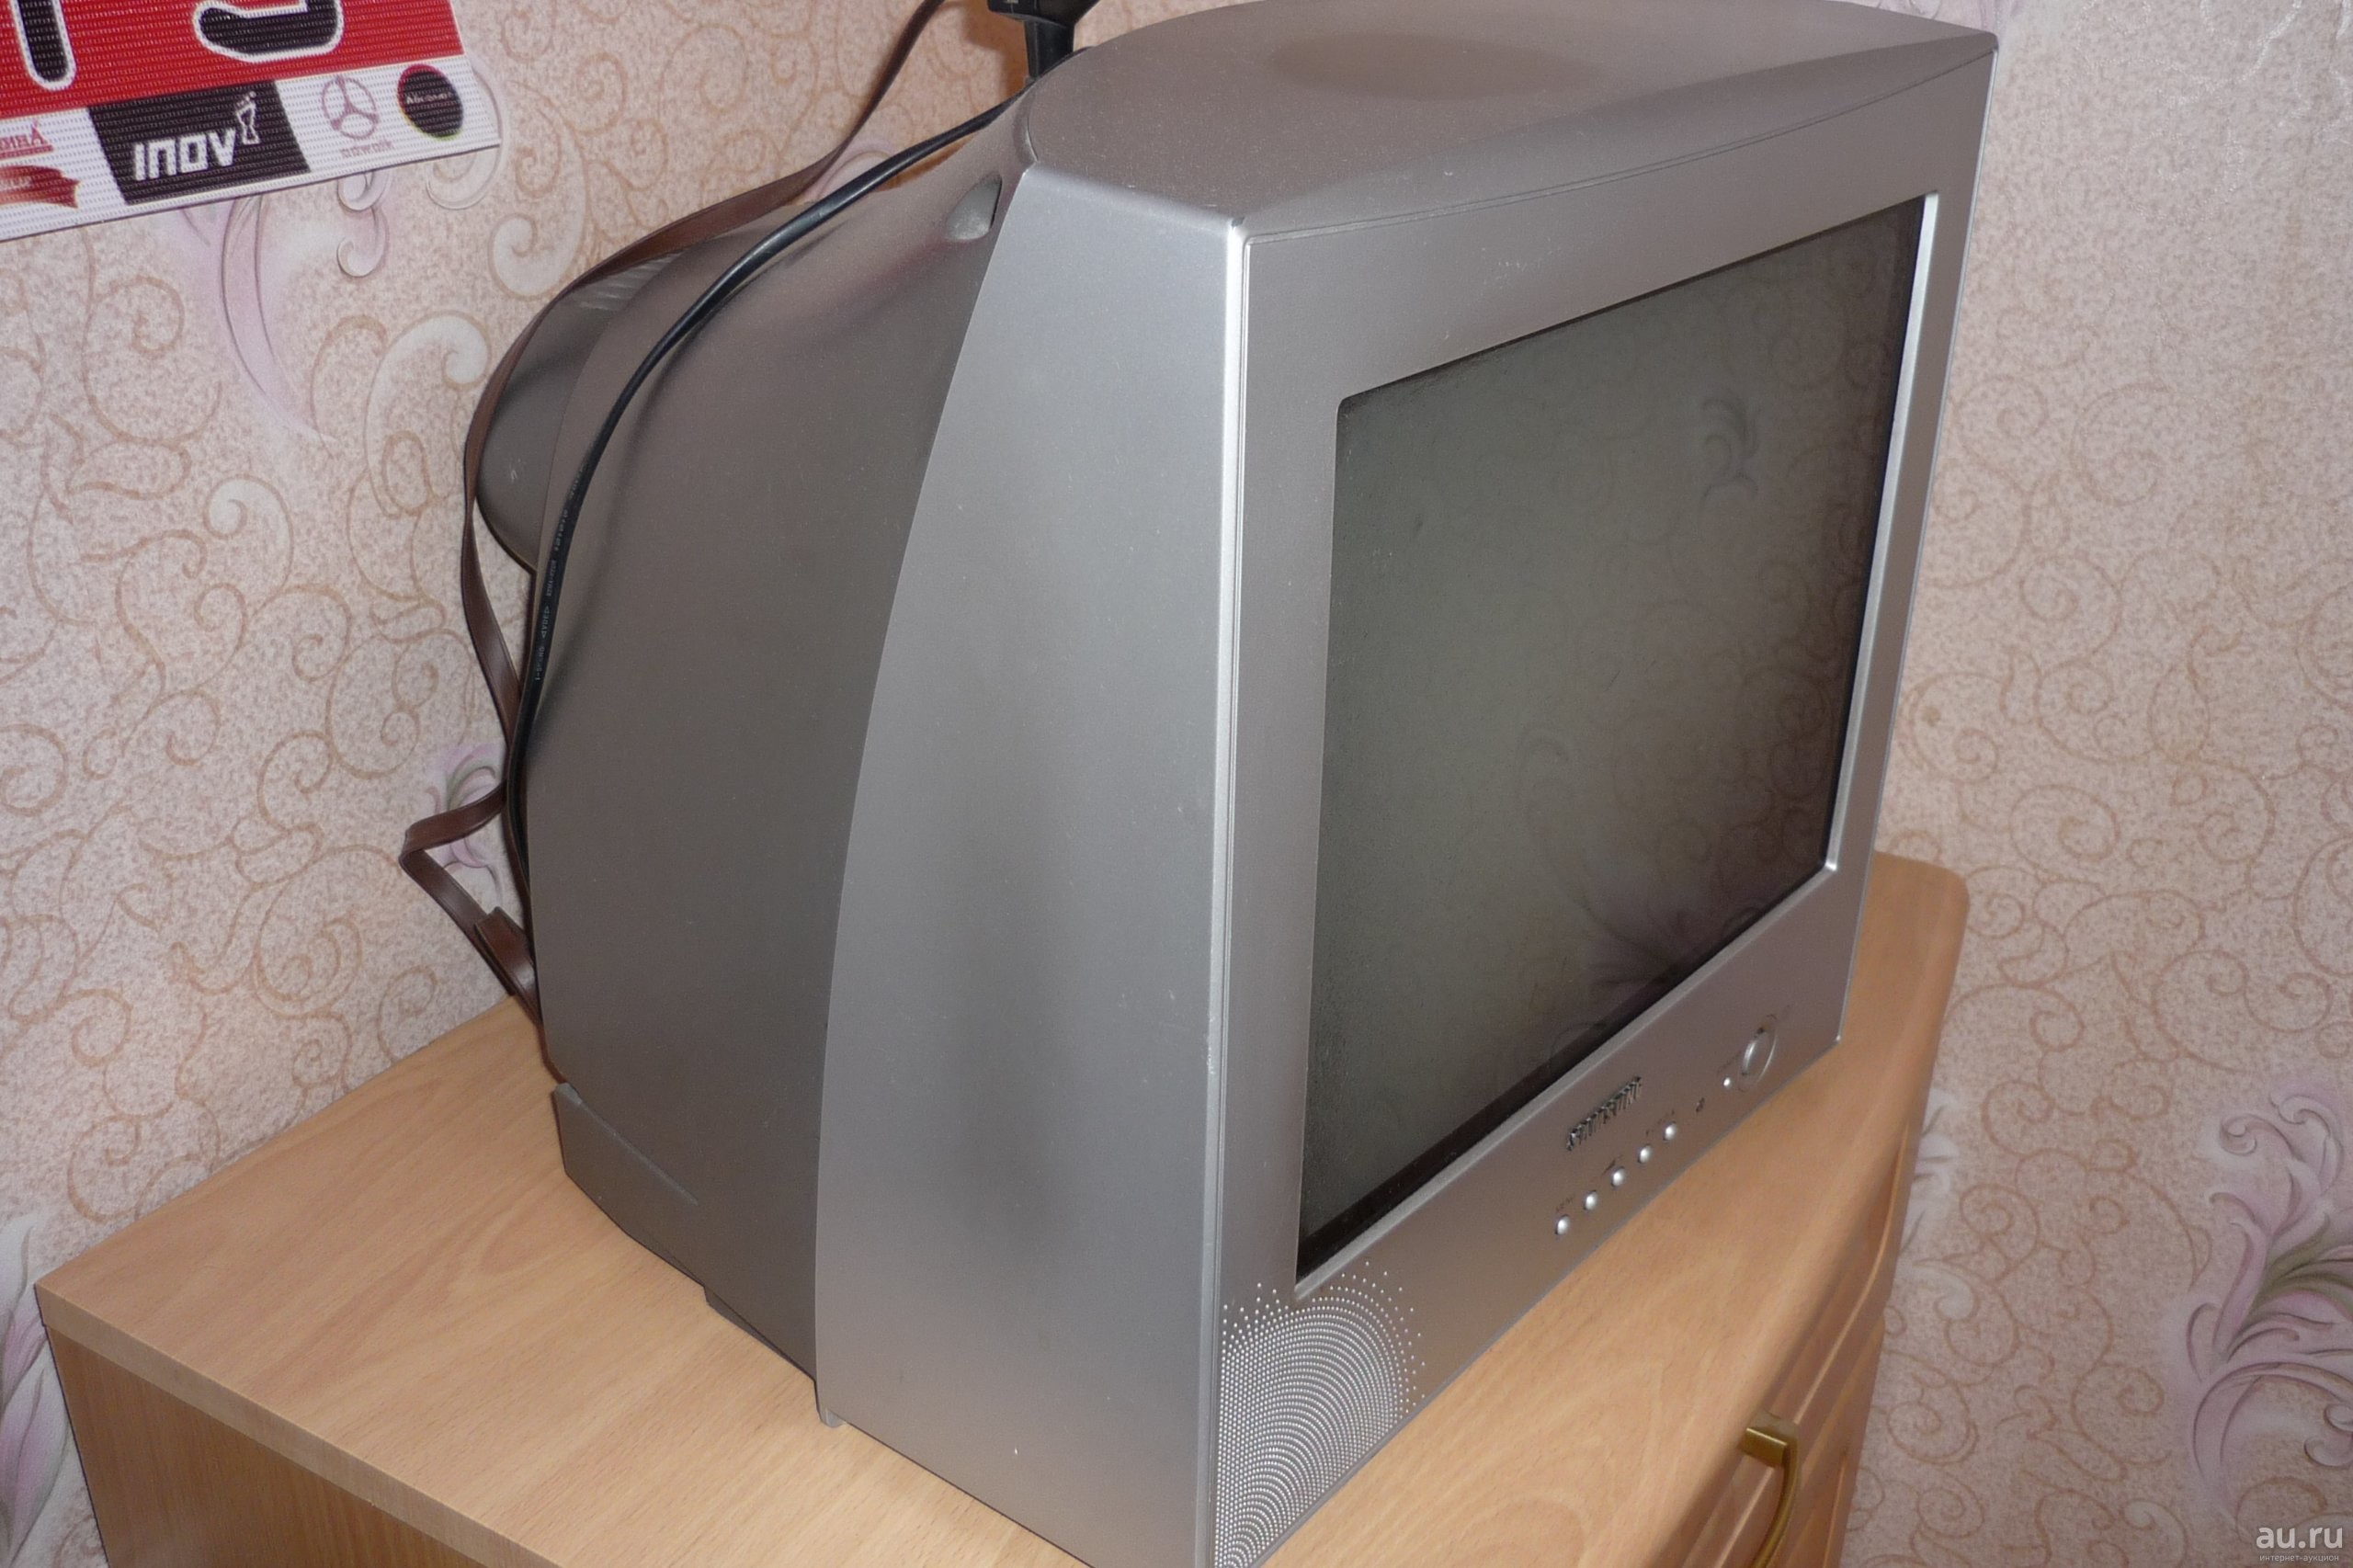 Авито брянск телевизоры. Телевизор самсунг старый кинескопный. Samsung 21 дюйм кинескопный. Телевизор Sharp ЭЛТ 21 дюйм. ЭЛТ телевизор Sharp 21 дюймов.